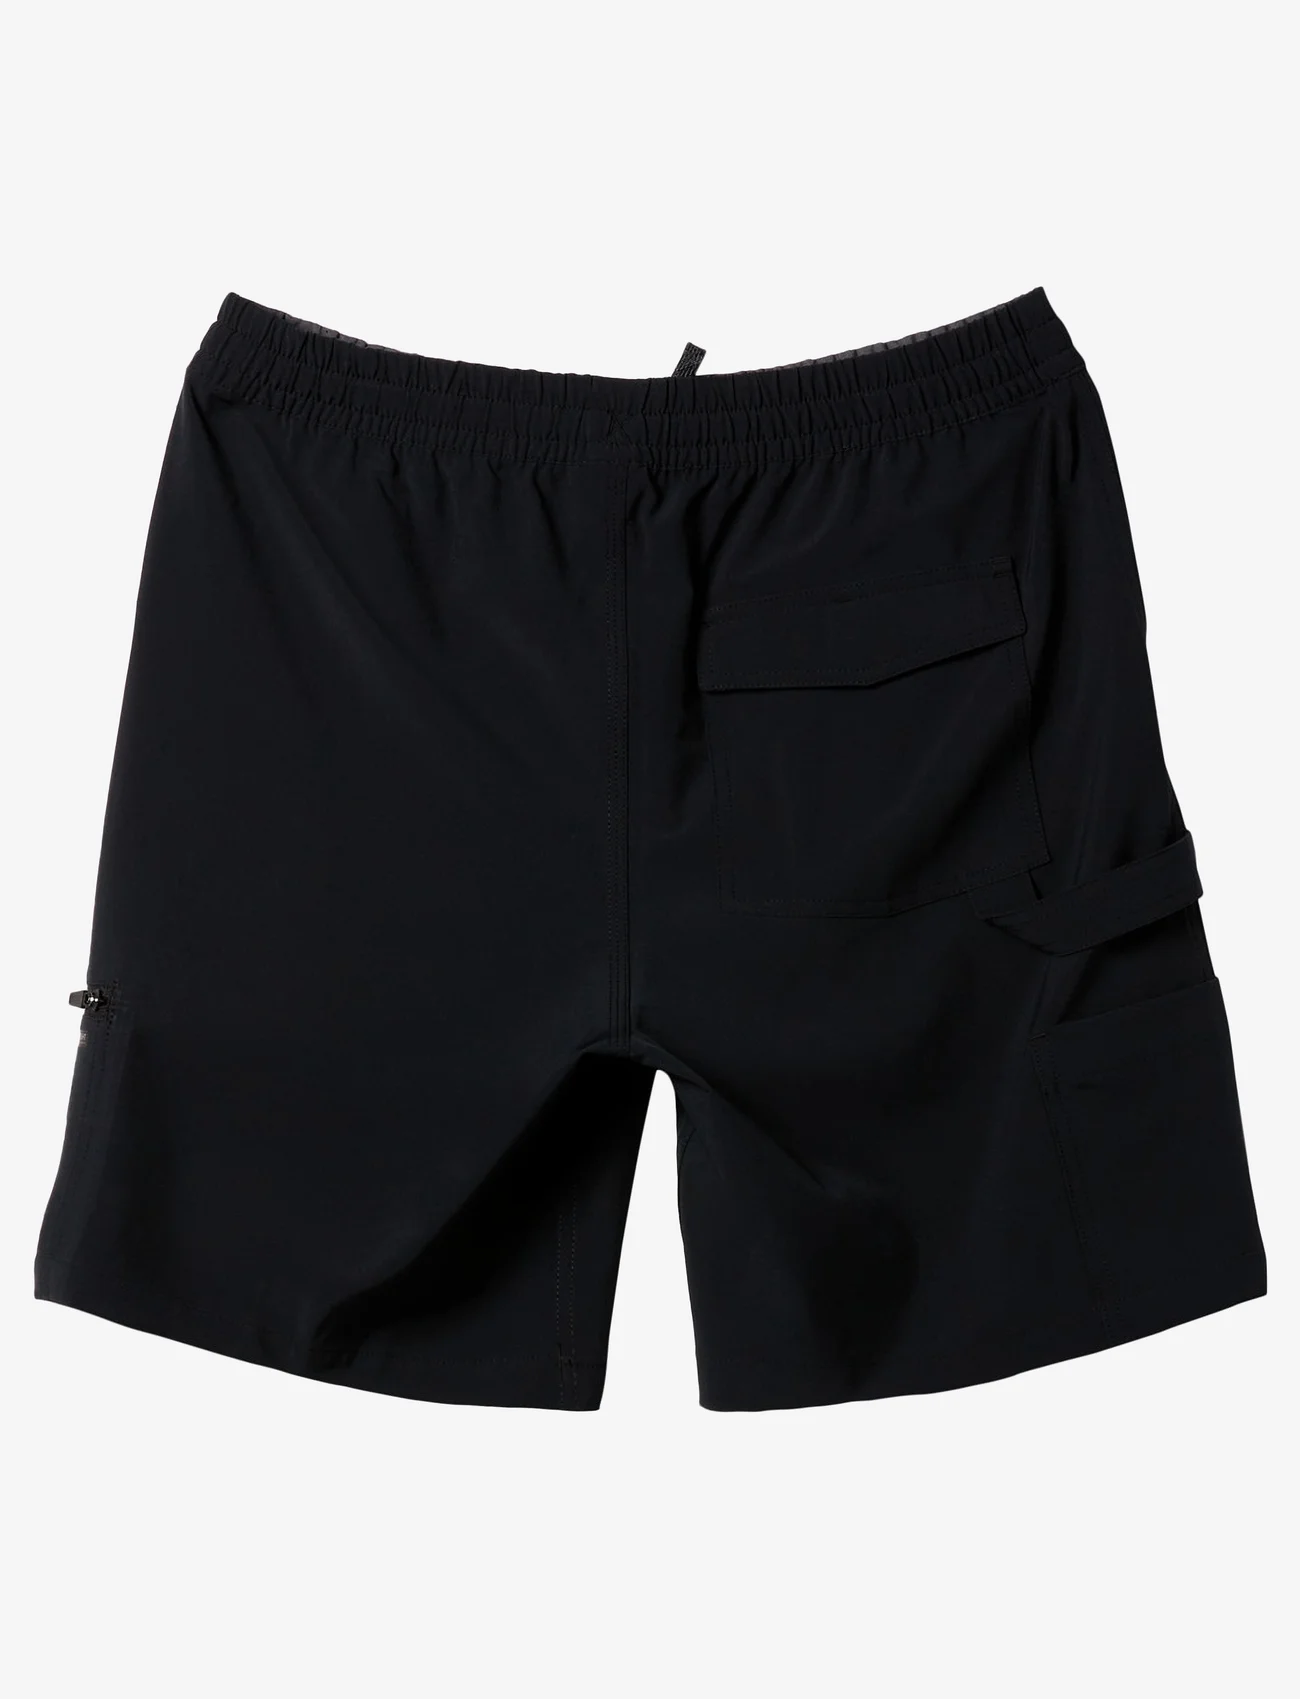 Quiksilver - TAXER CARGO AMPHIBIAN 19 - swim shorts - black - 1